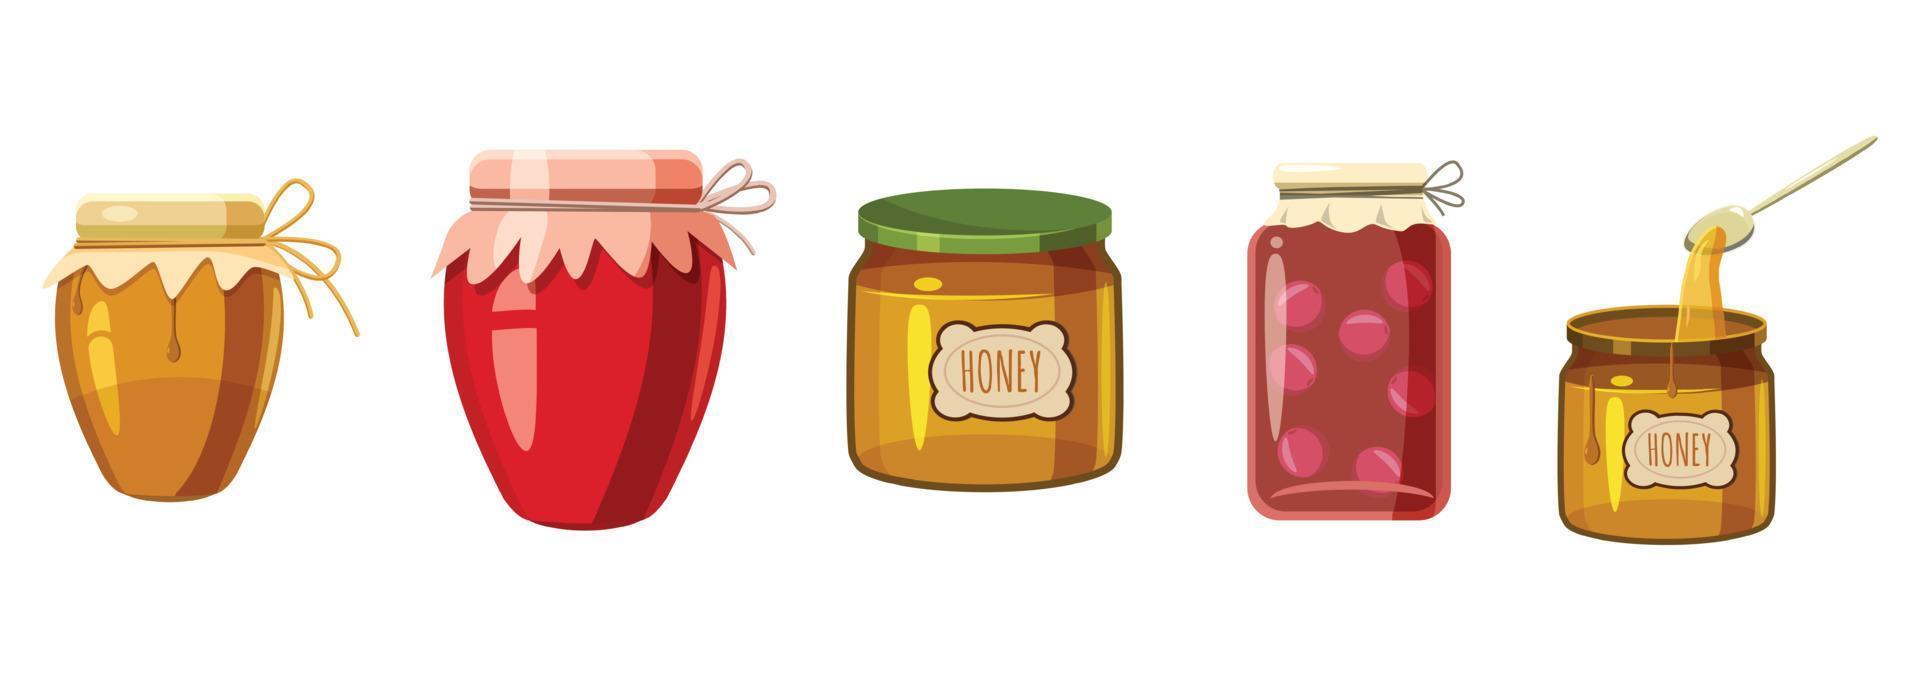 Jar icon set, cartoon style vector